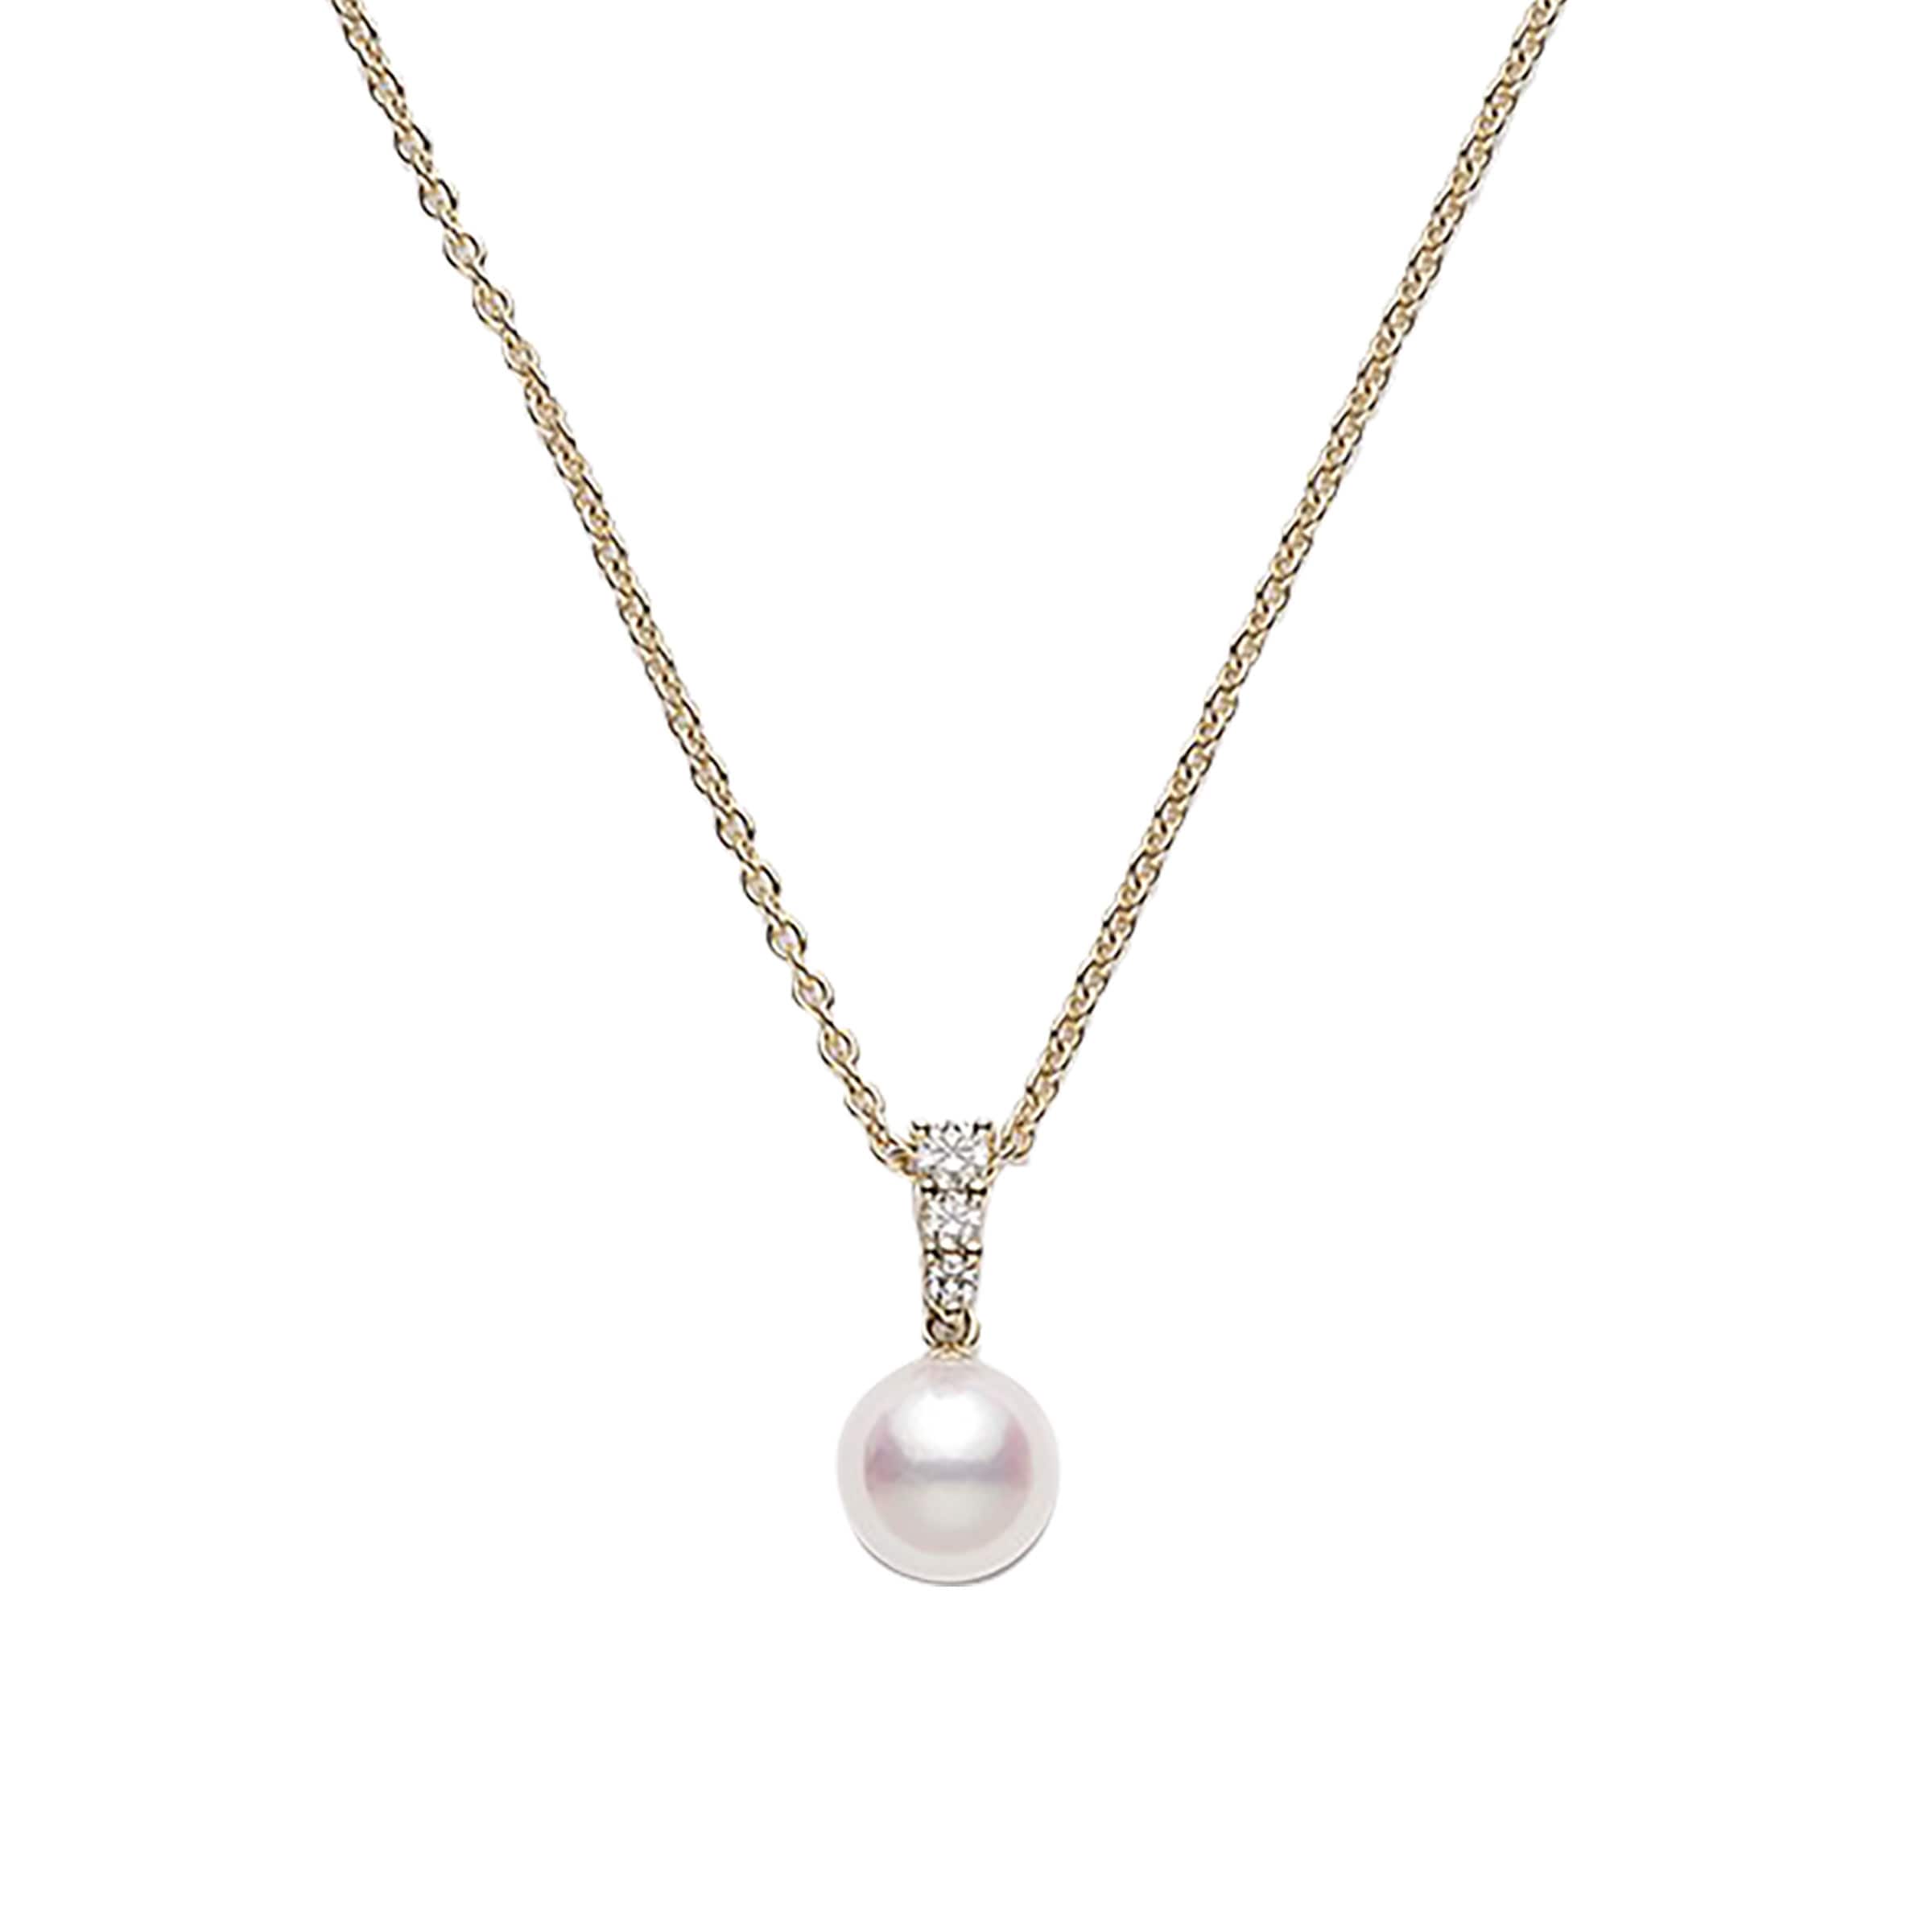 Mikimoto pearl platinum necklace - Jewelry